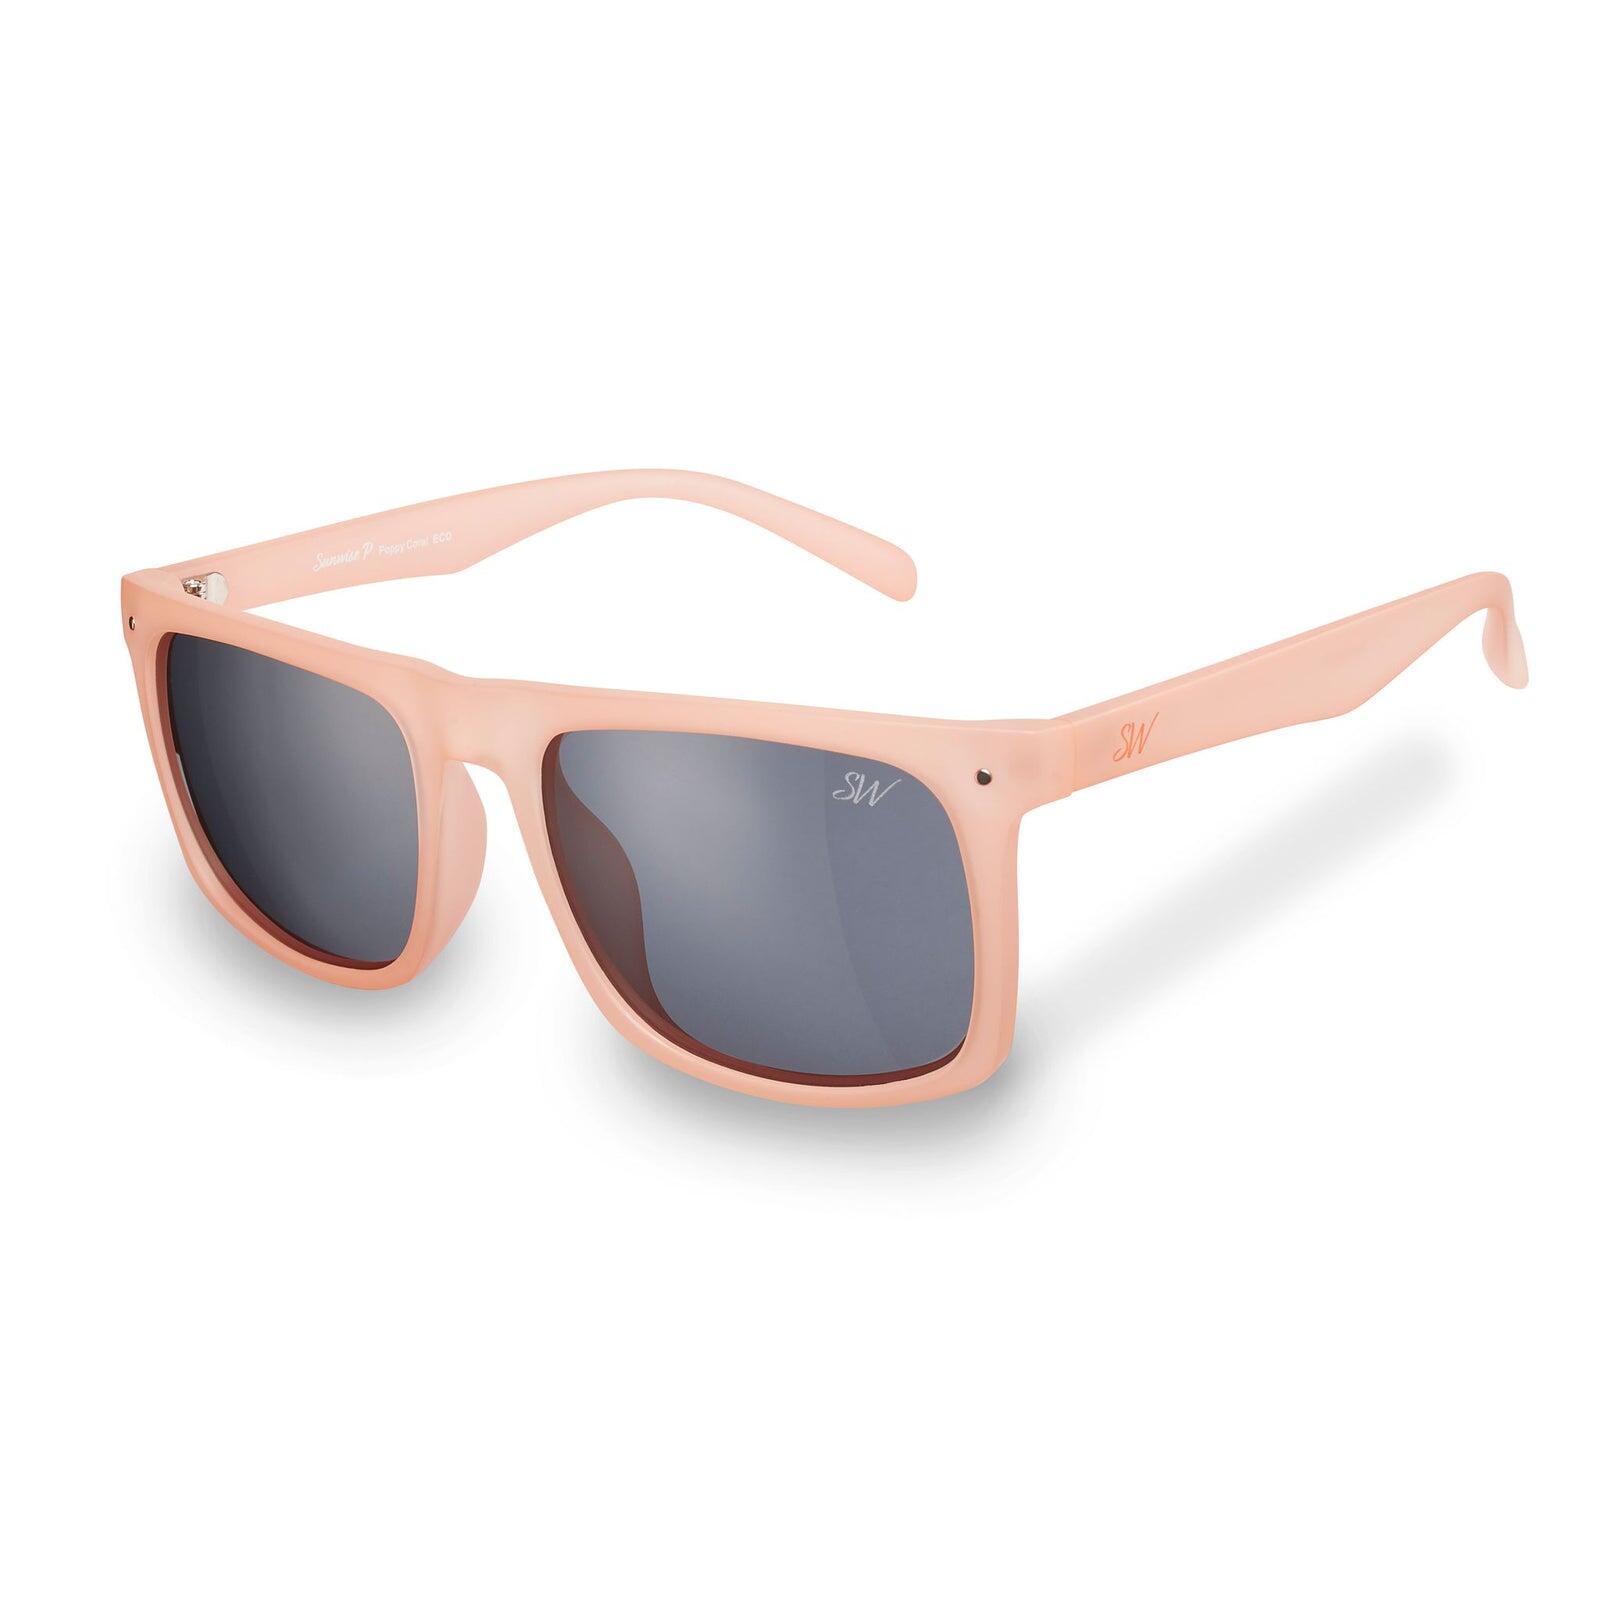 Poppy Lifestyle Sports Sunglasses  - Category 3 1/3